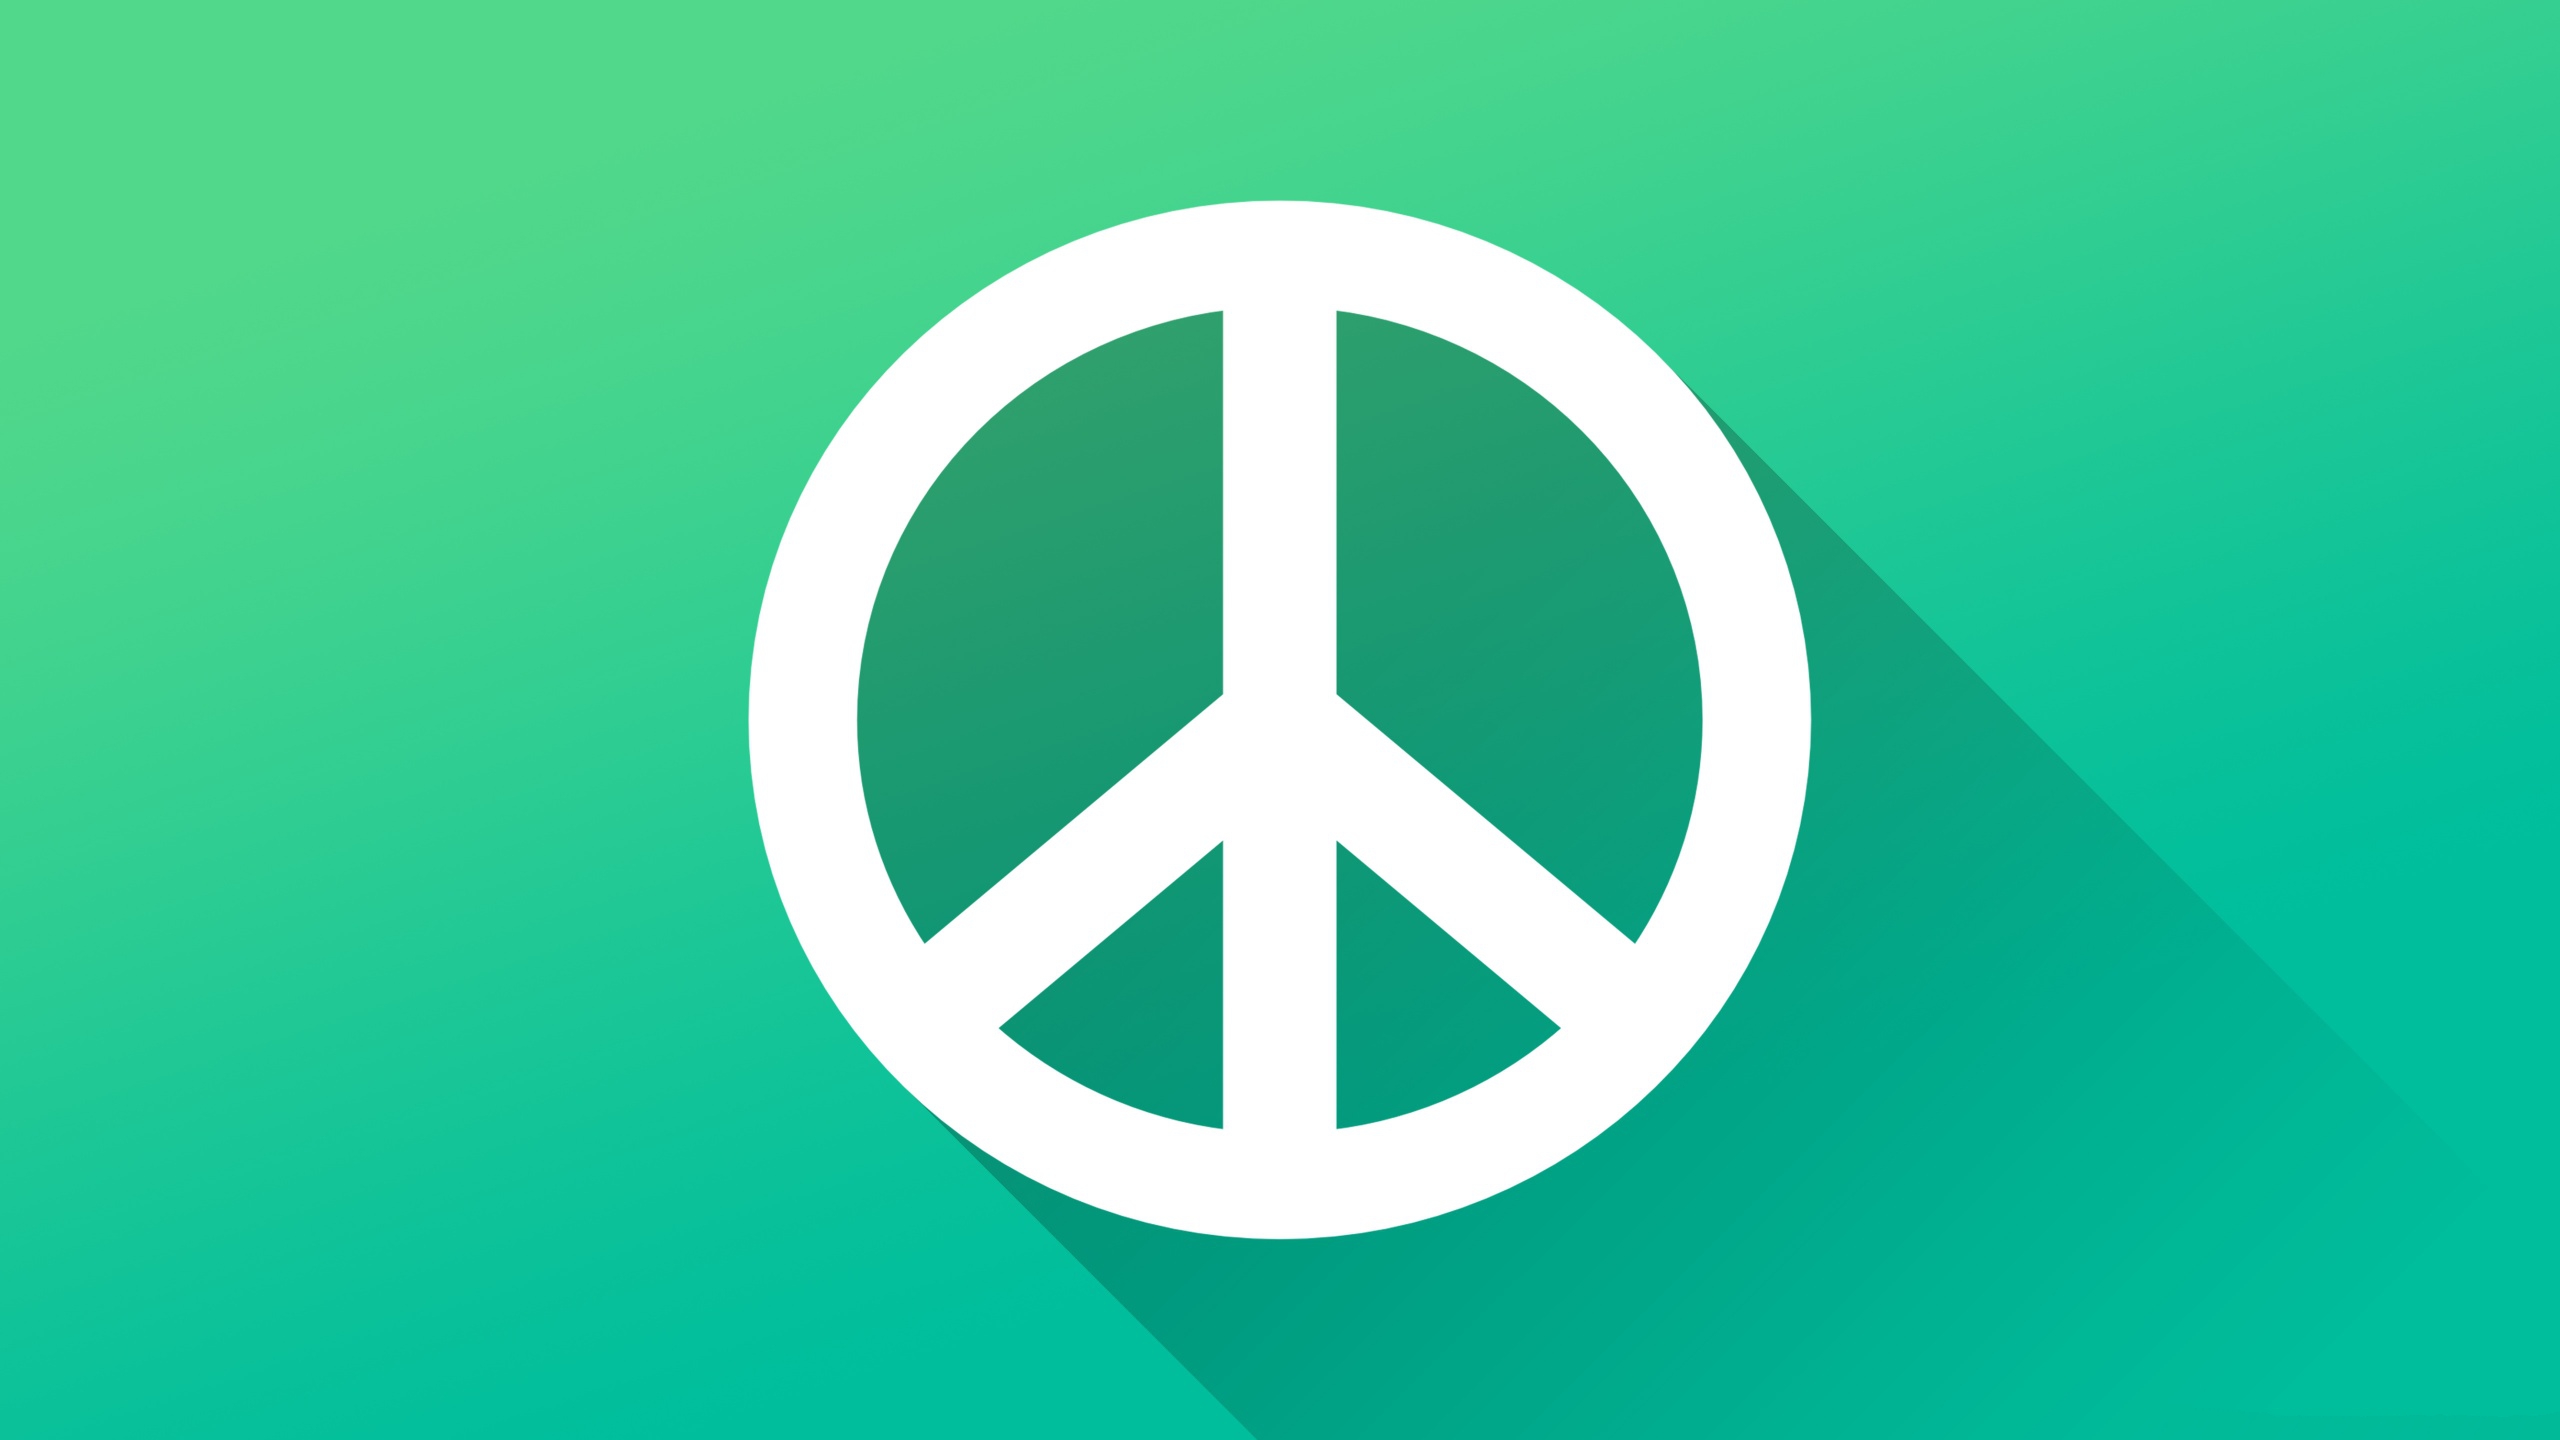 peace wallpaper,green,turquoise,symbol,logo,peace symbols